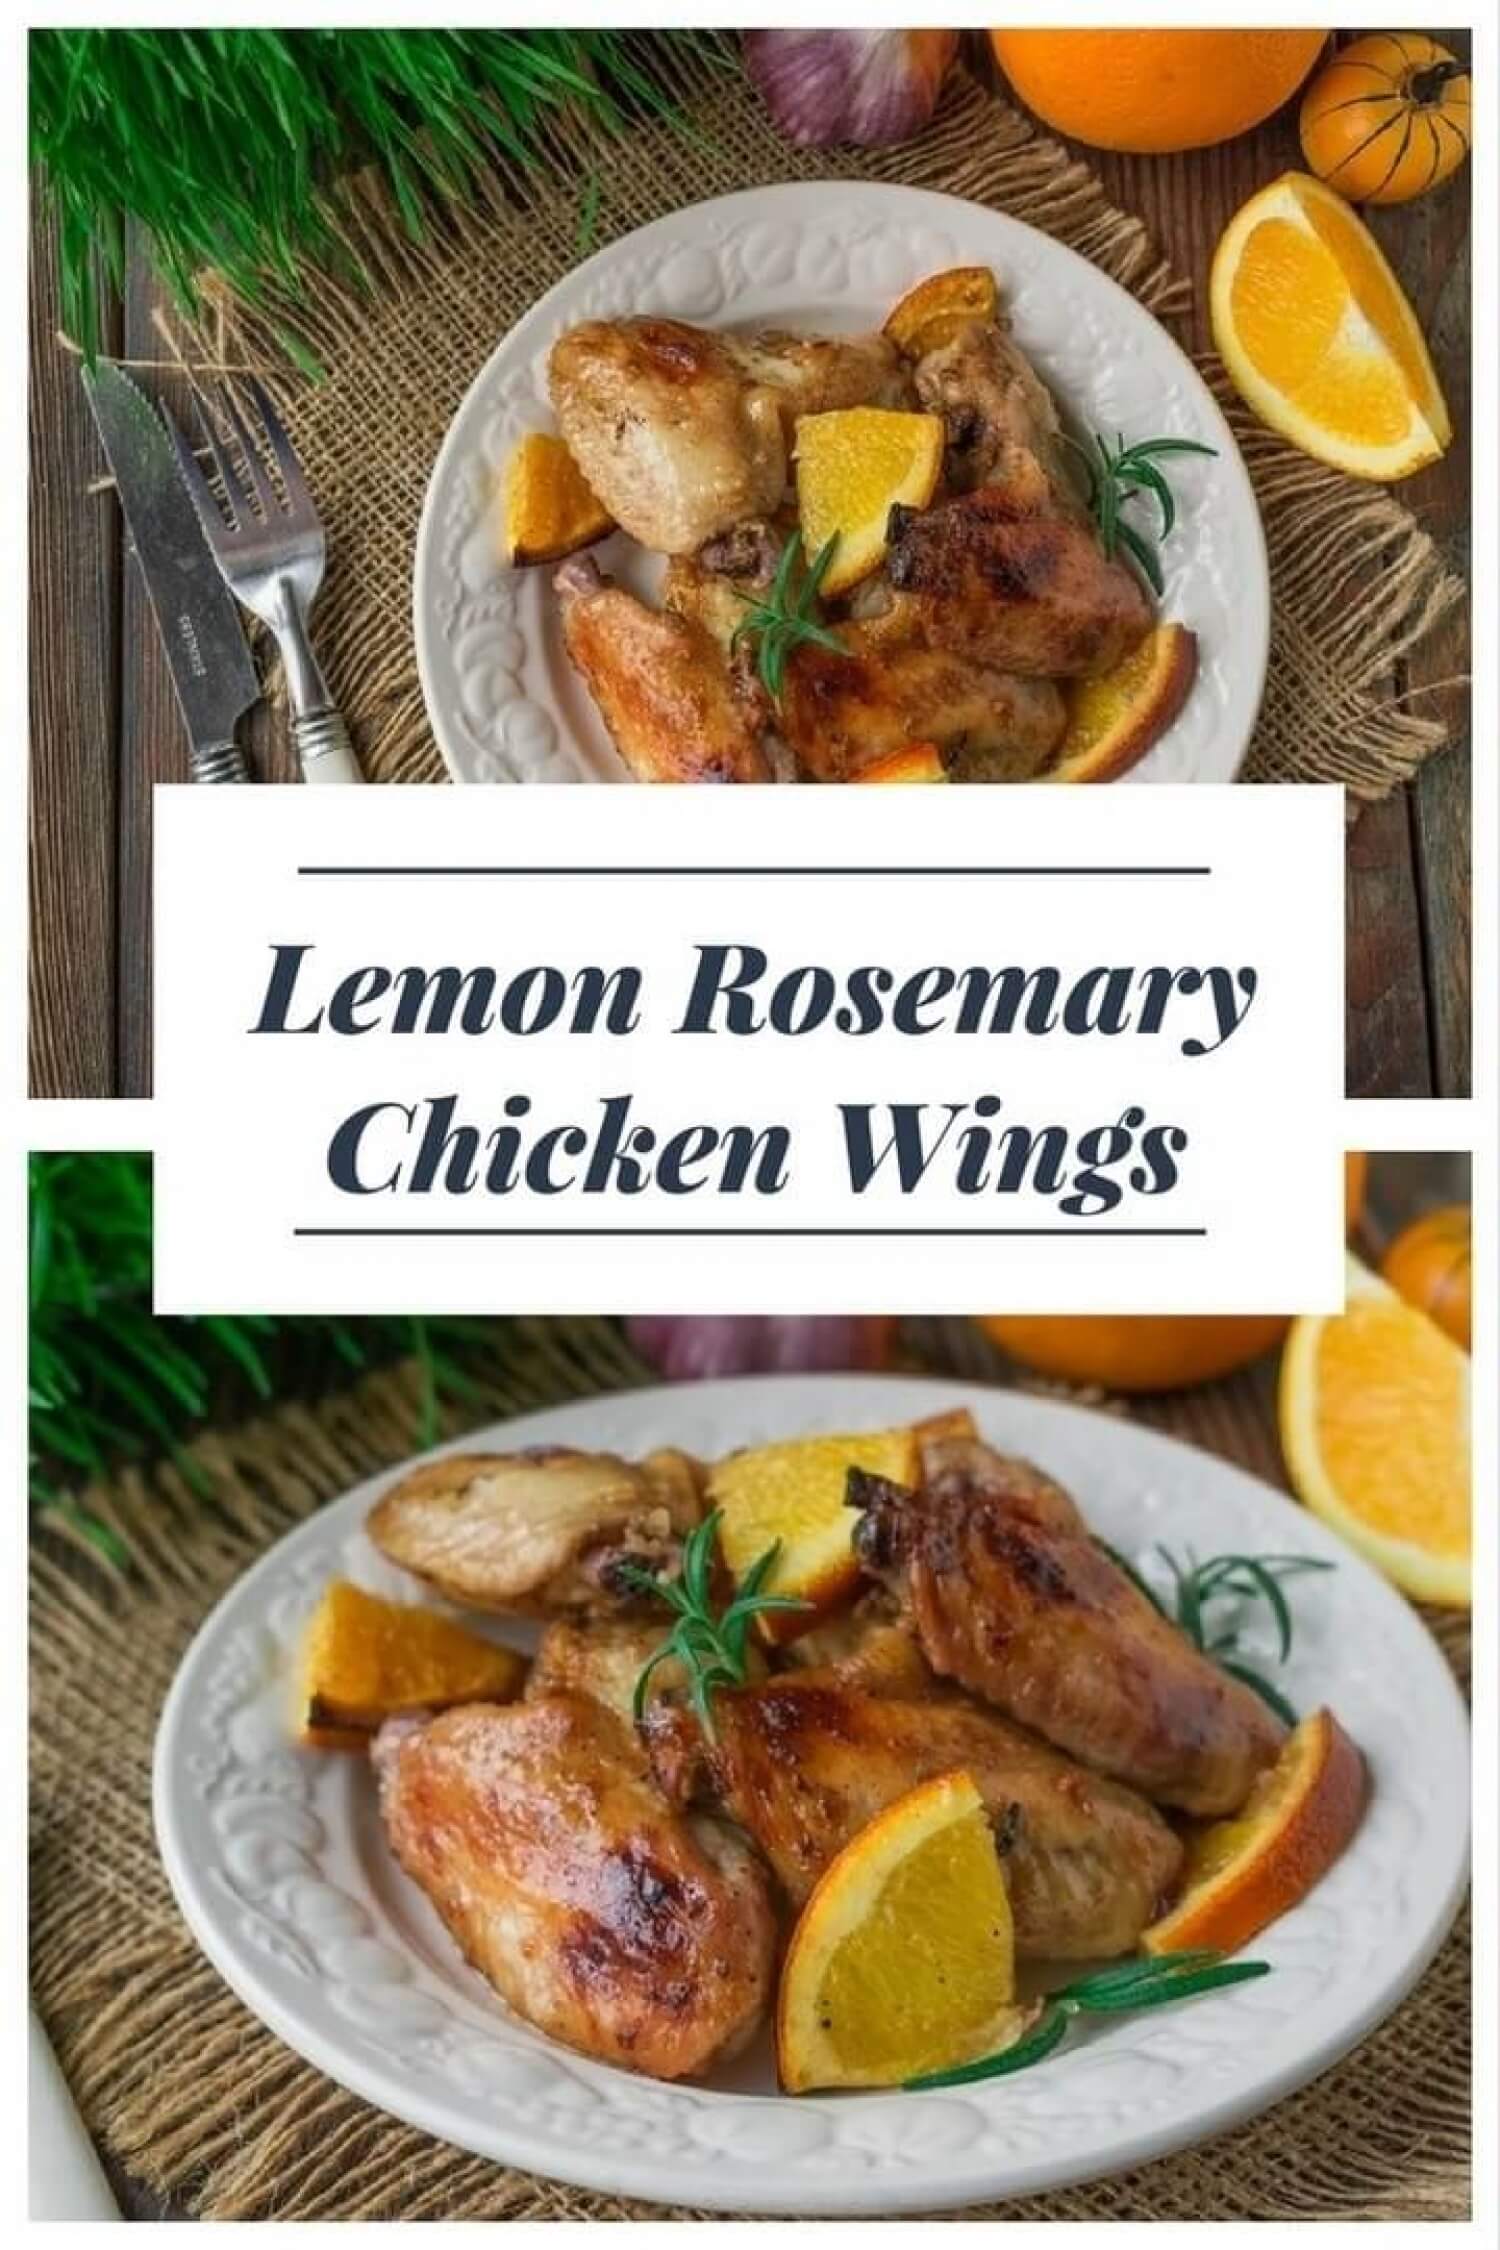 Lemon Rosemary Chicken Wings